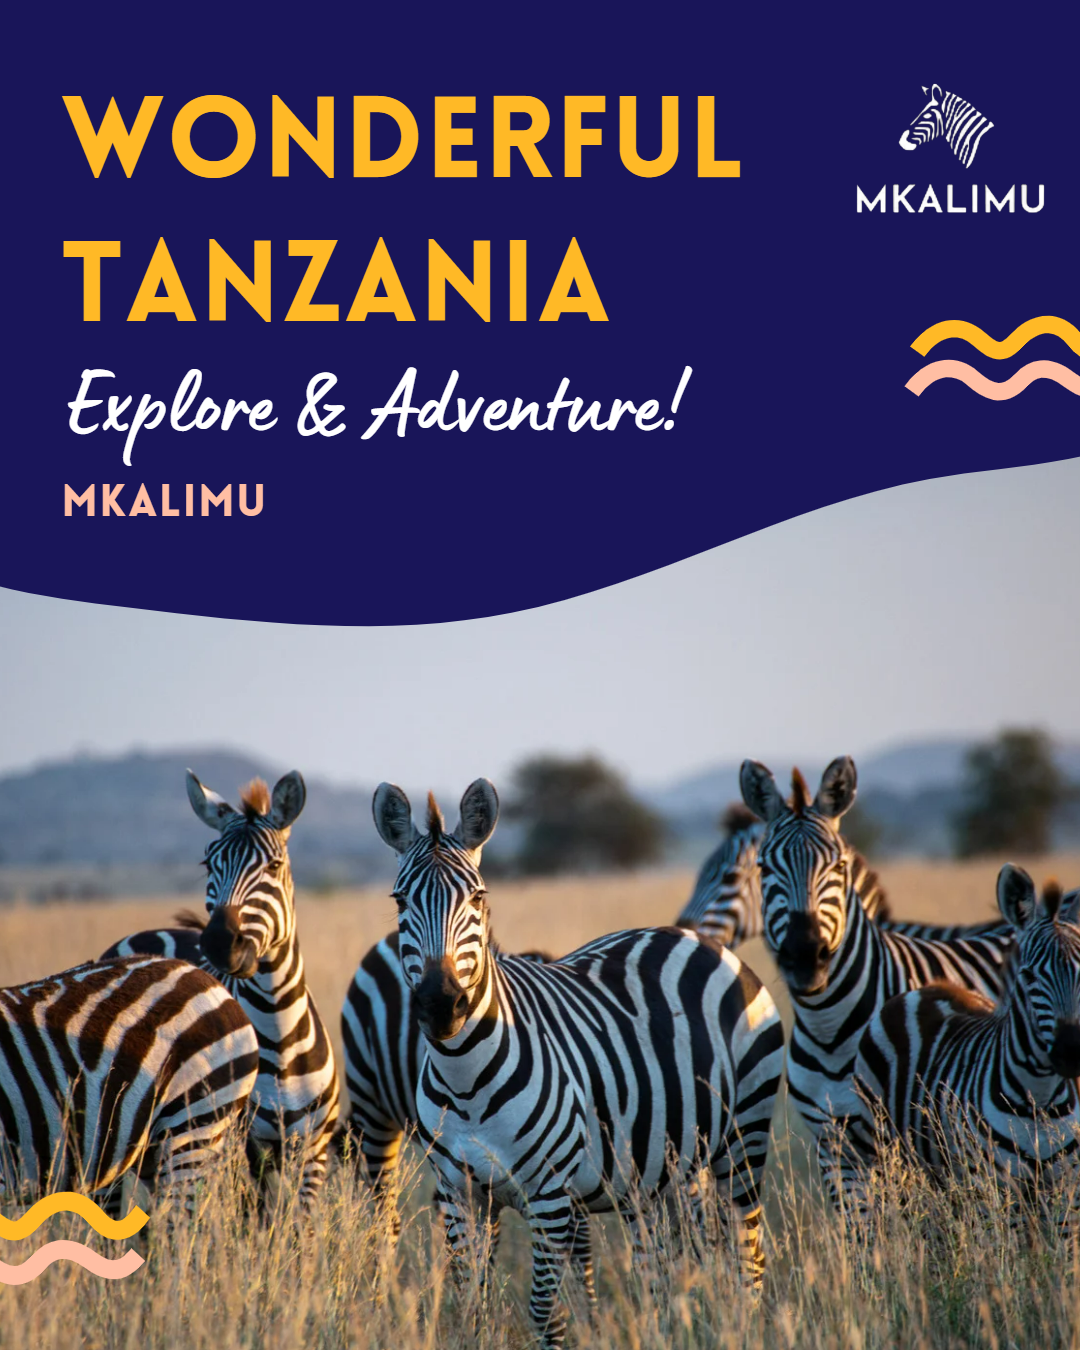 Experience Tanzania with Mkalimu Tours